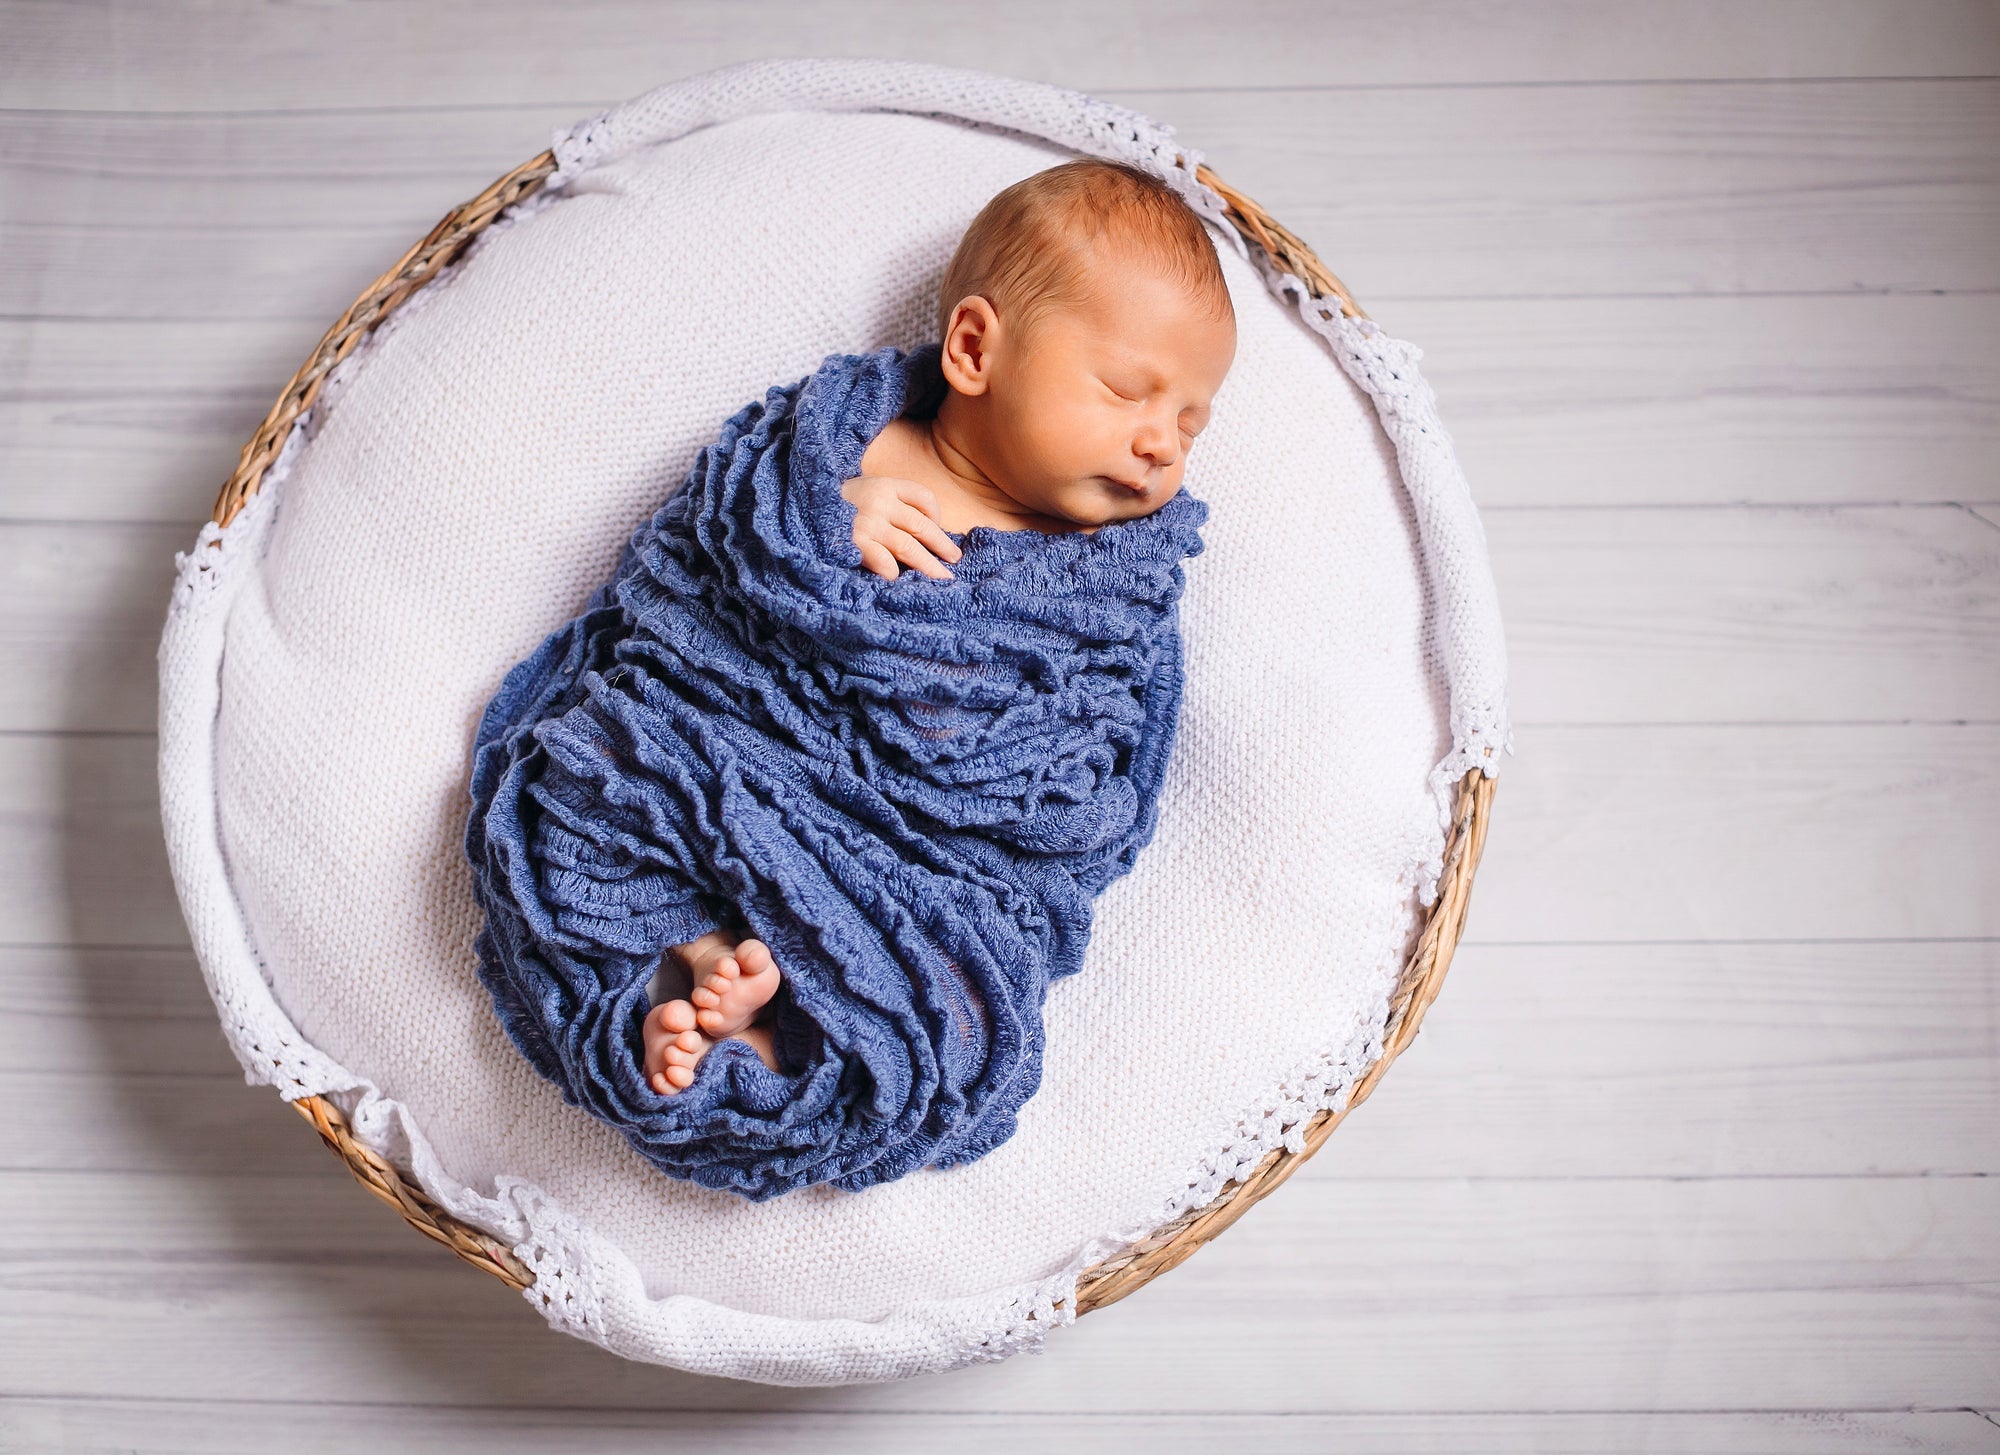 Common Newborn Sleep Facts and Myths